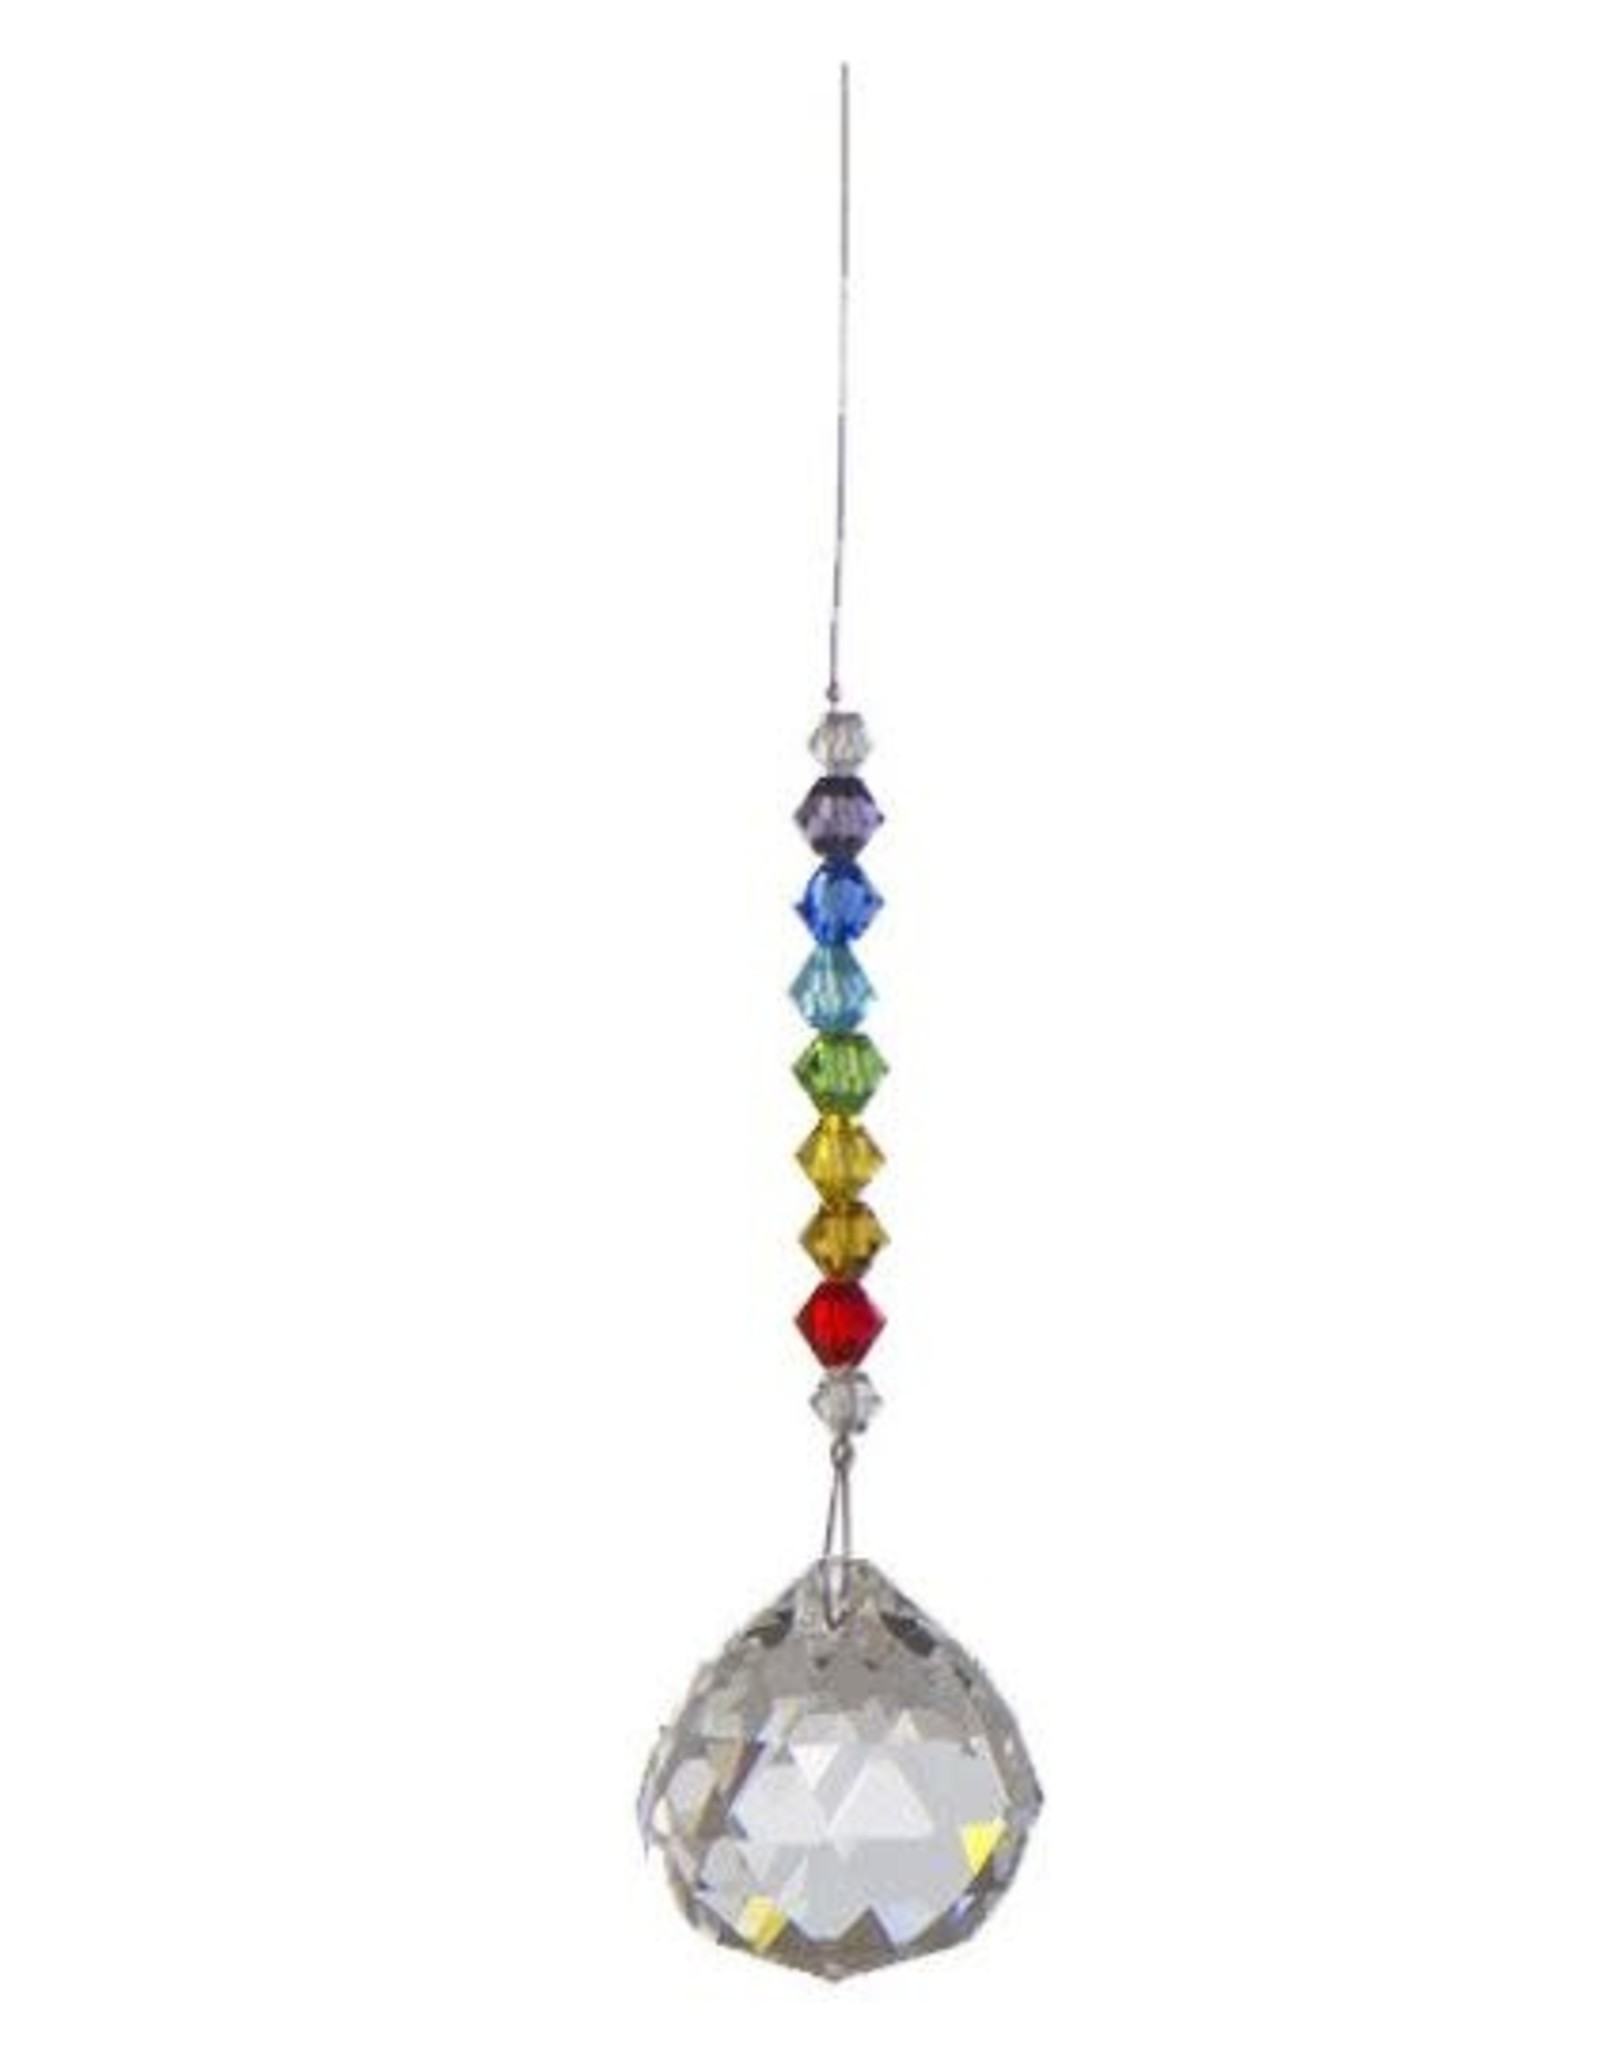 Crystal Art - Chakra Beads & Ball